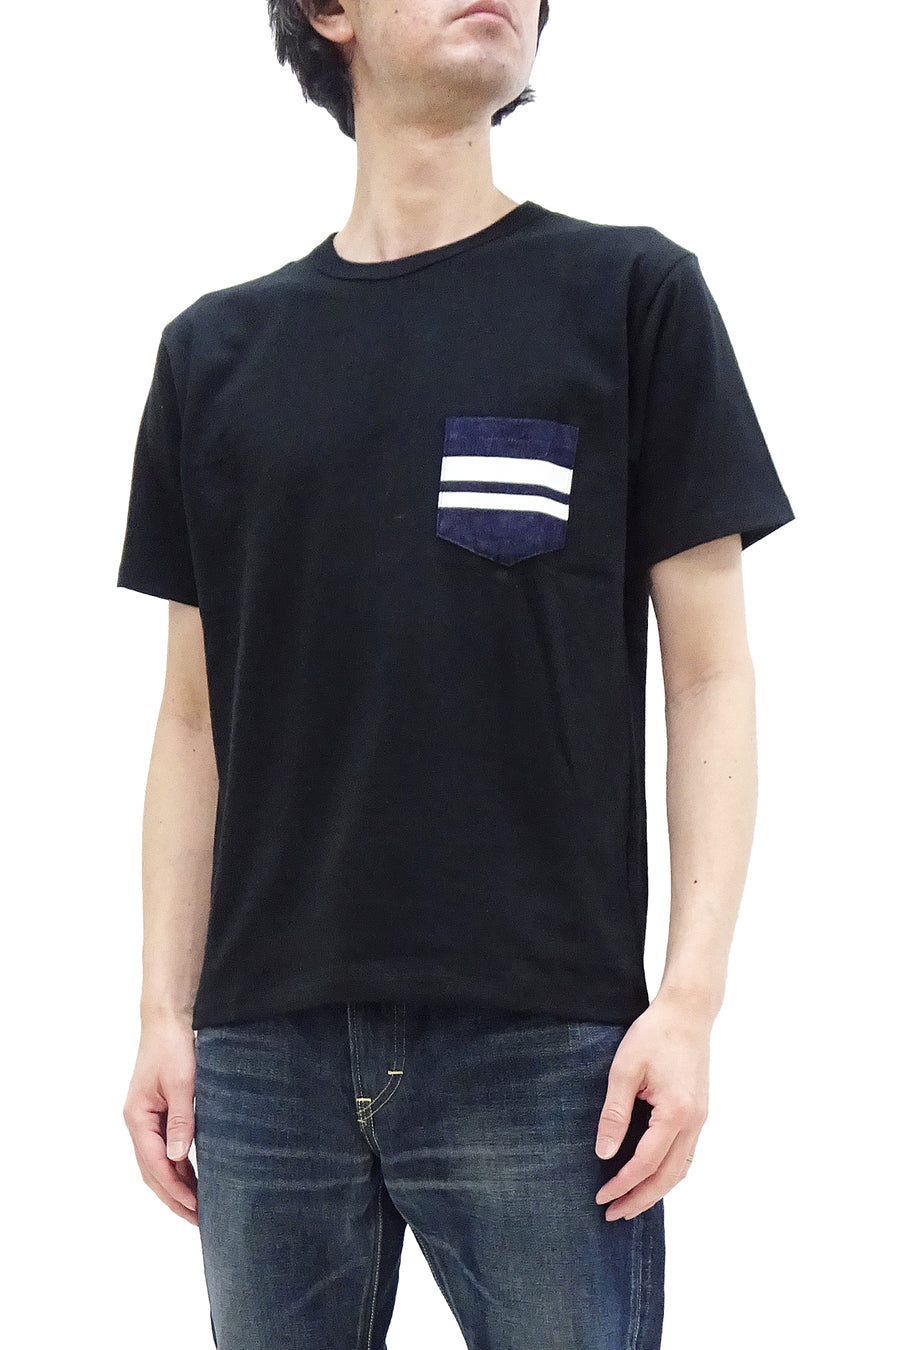 Momotaro Jeans Sleeve Short GTB Men\'s – Shirt T-shirt St RODEO-JAPAN Pine-Avenue Clothes with Tee shop Pocket